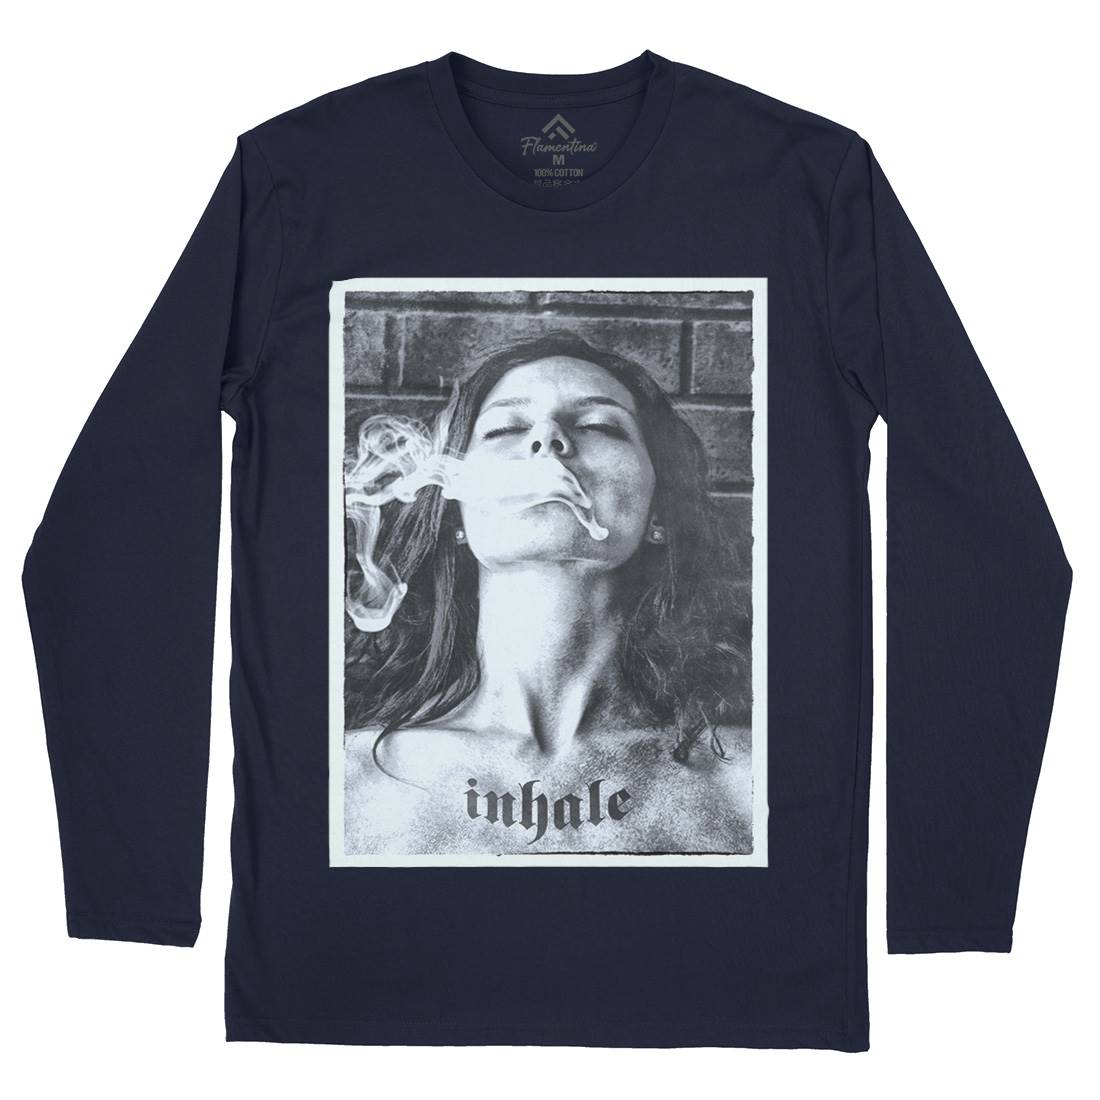 Inhale Mens Long Sleeve T-Shirt Drugs A851